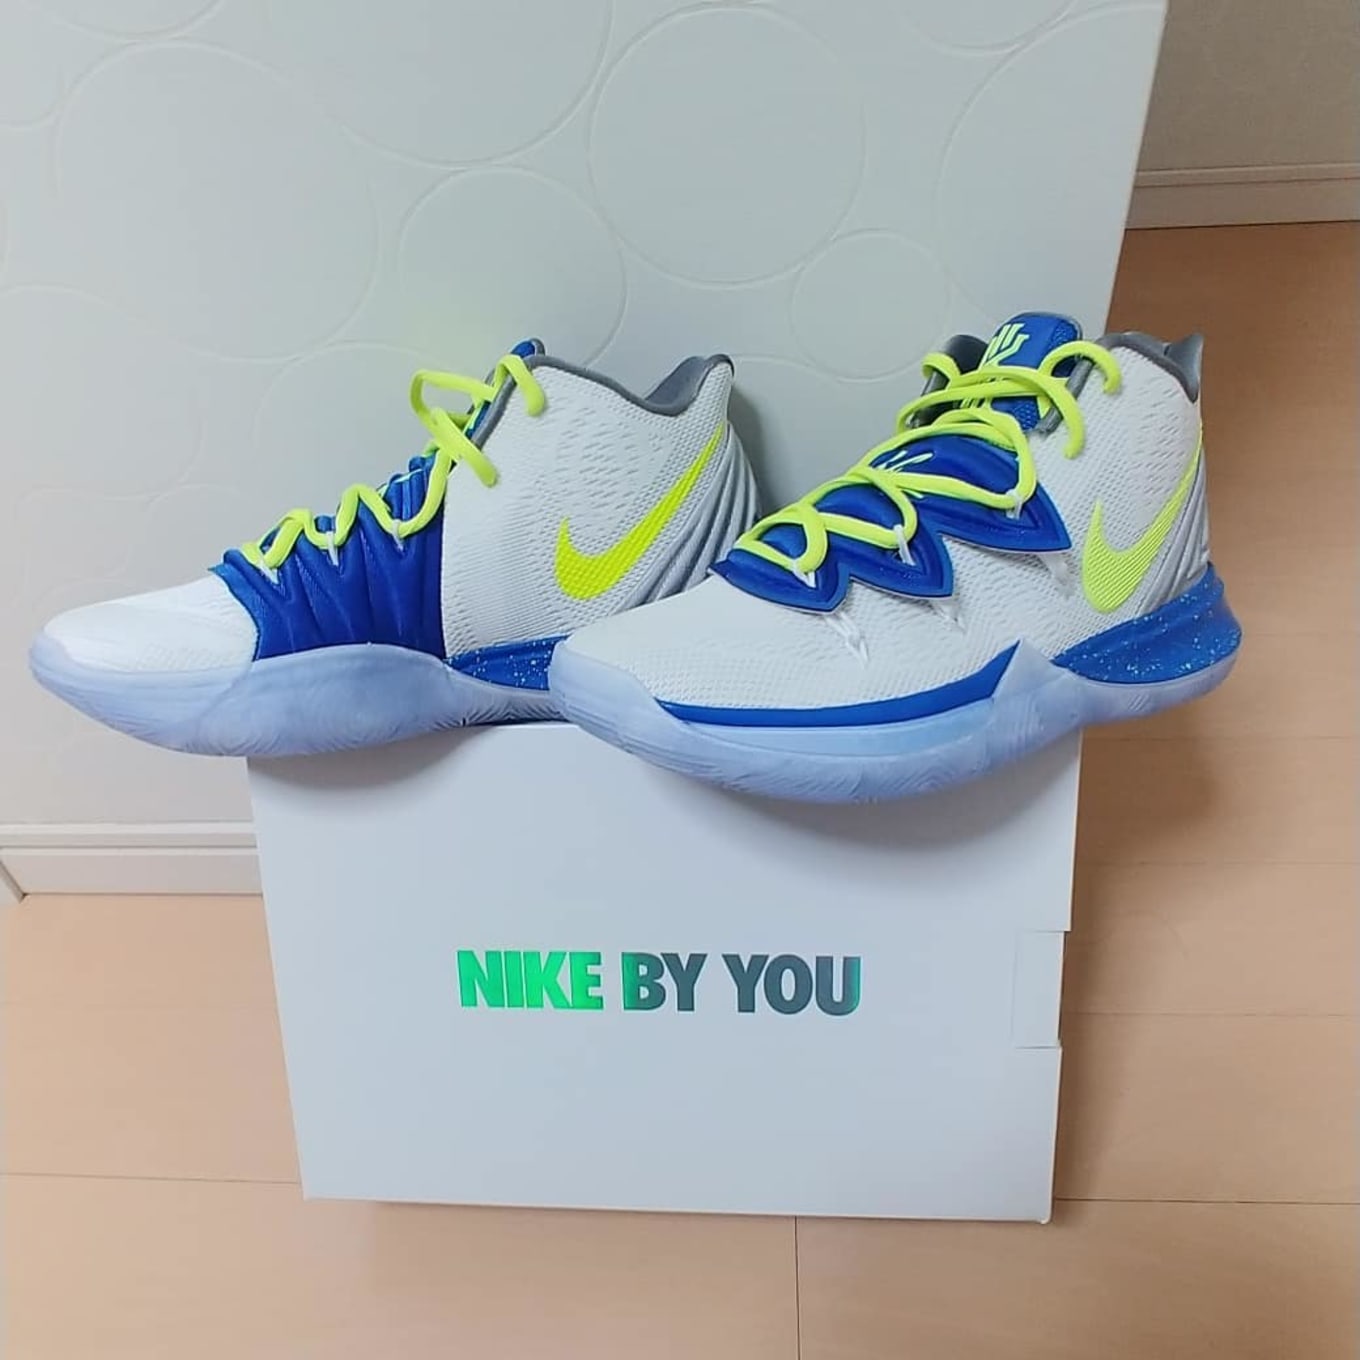 Nike Men 's Kyrie 5 Basketball Shoes Black Size: 13.5 UK: Amazon